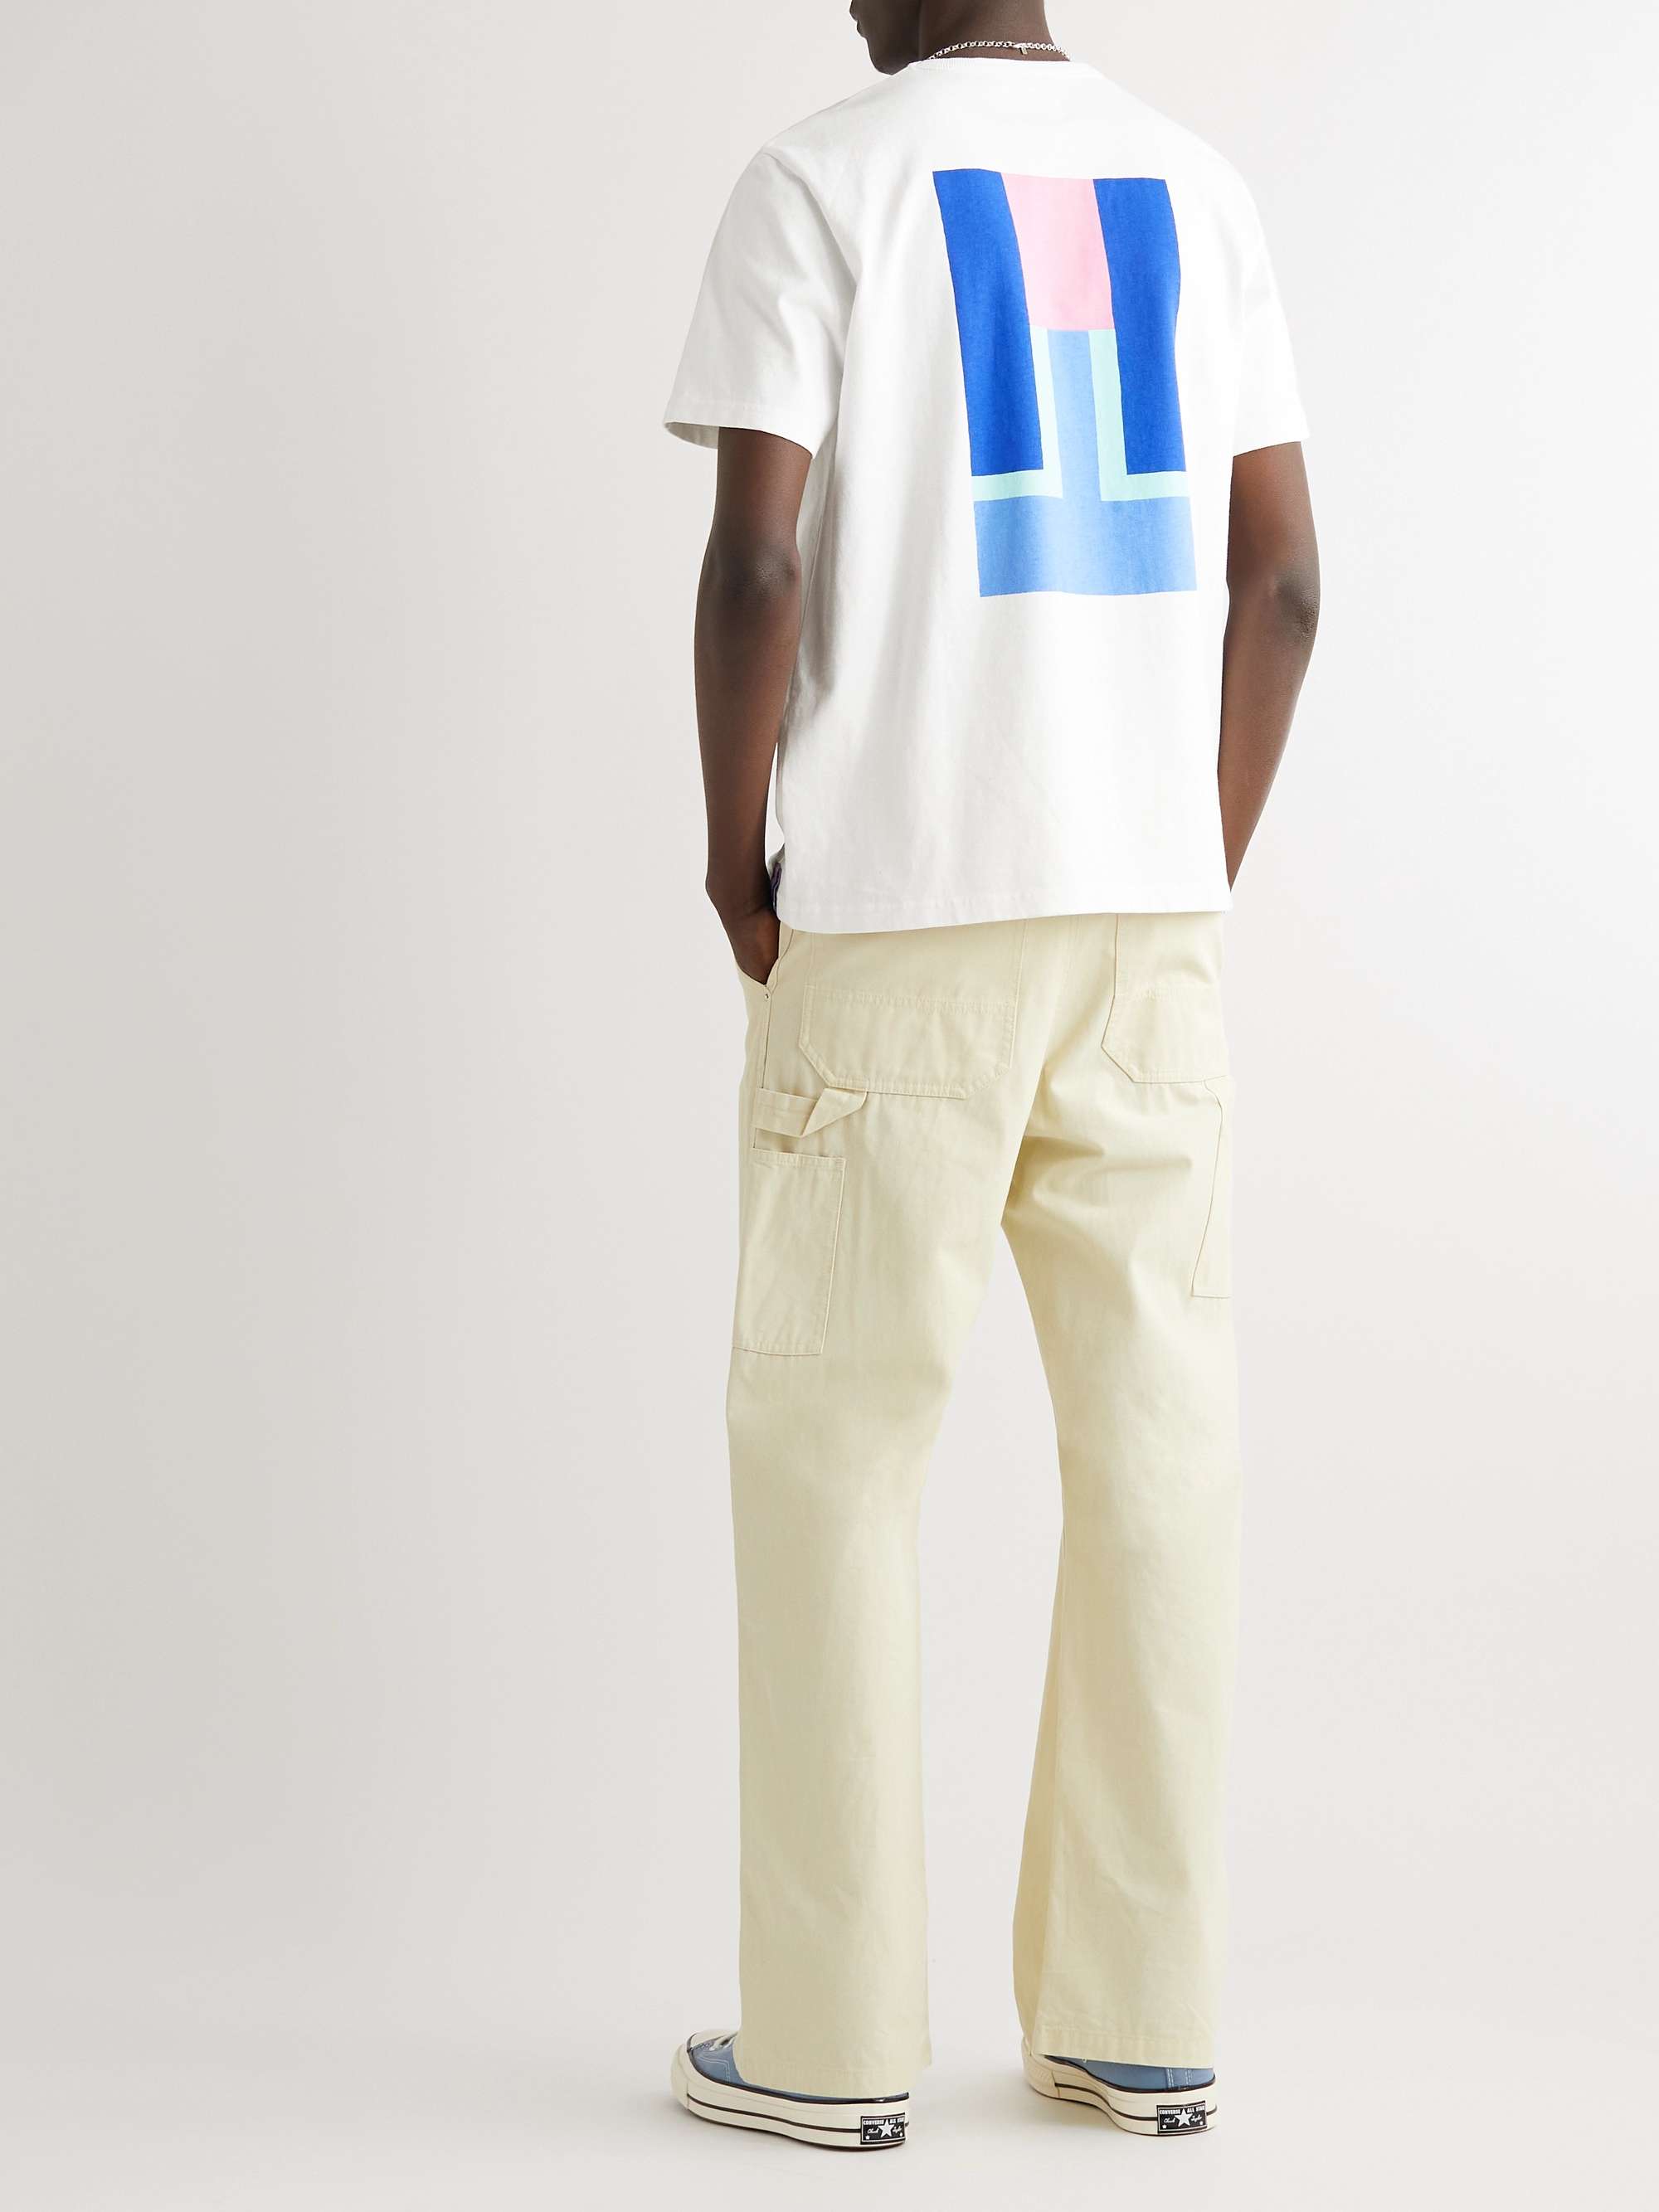 FOLK + Damien Poulain Logo-Appliquéd Printed Organic Cotton-Jersey T-Shirt